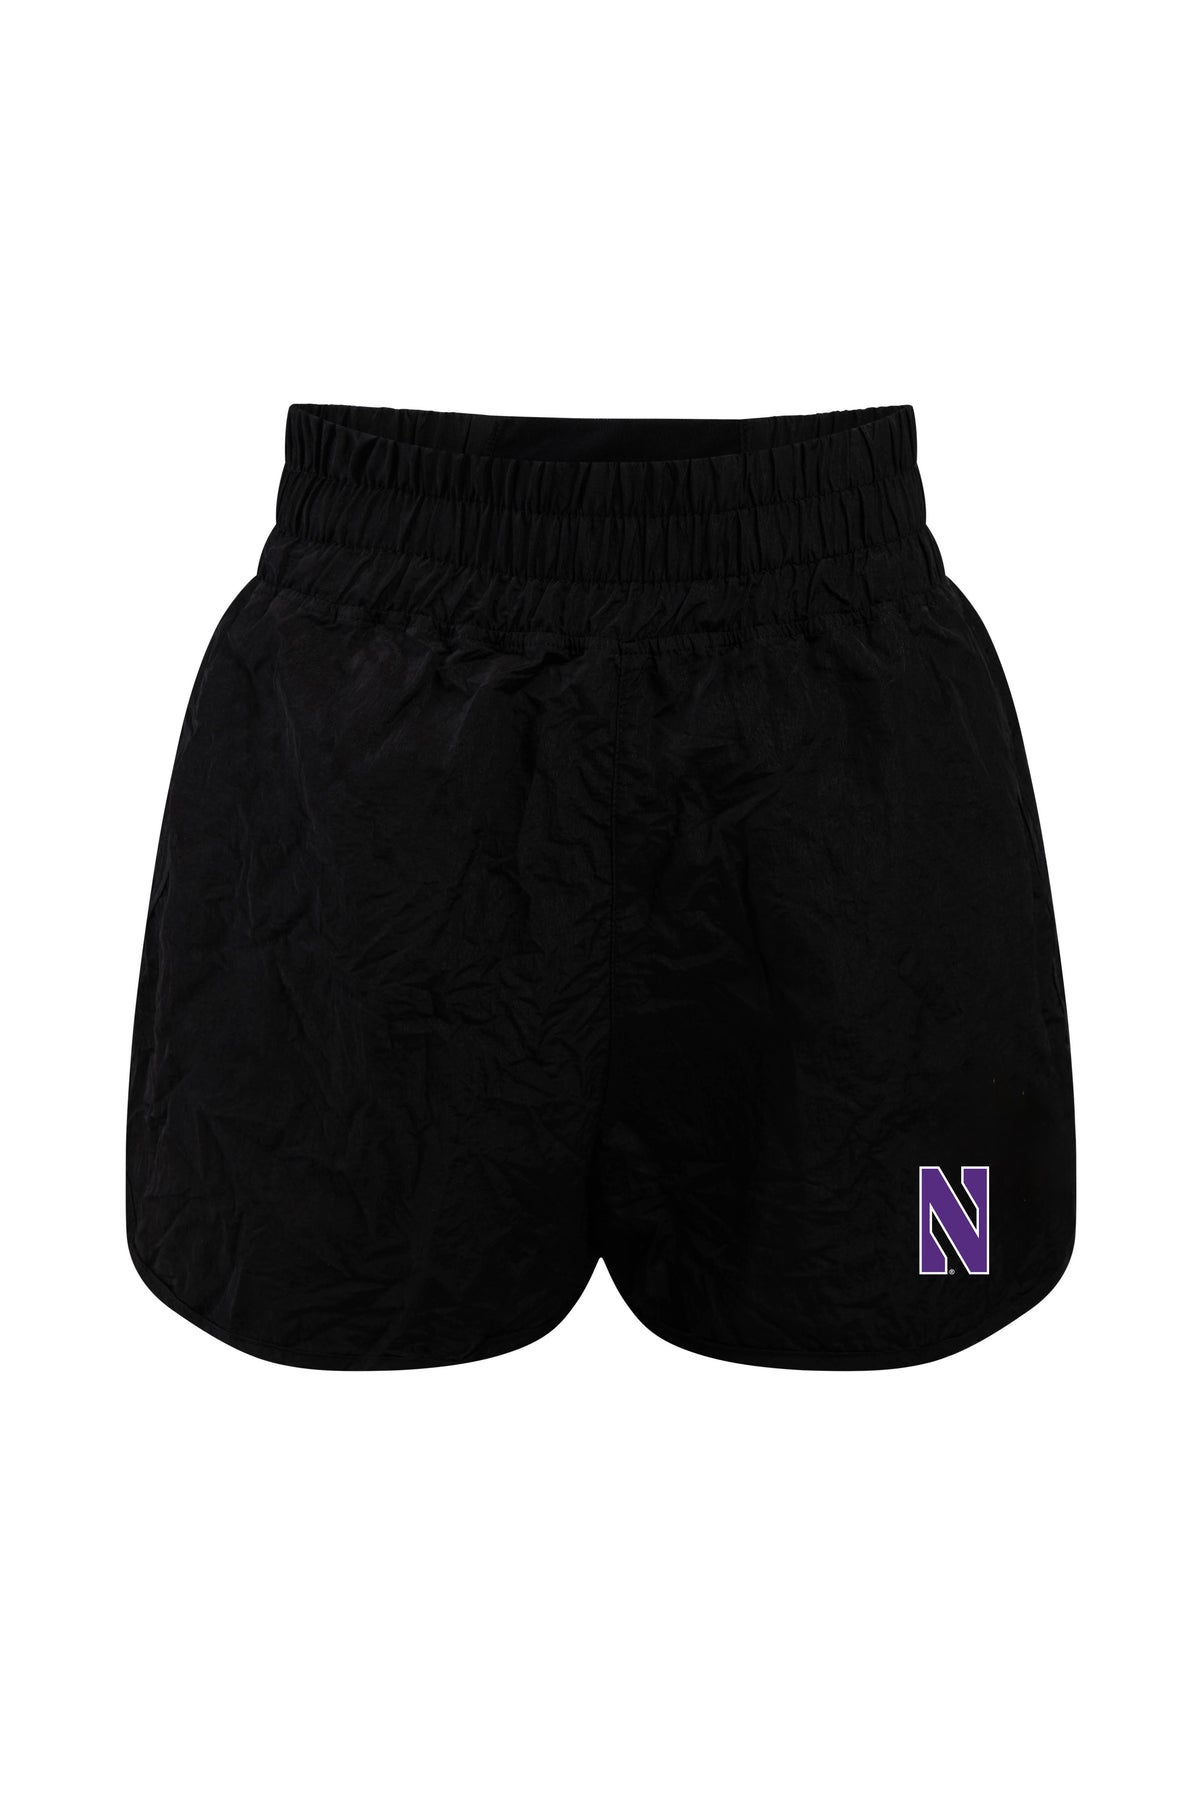 Northwestern University Boxer Short